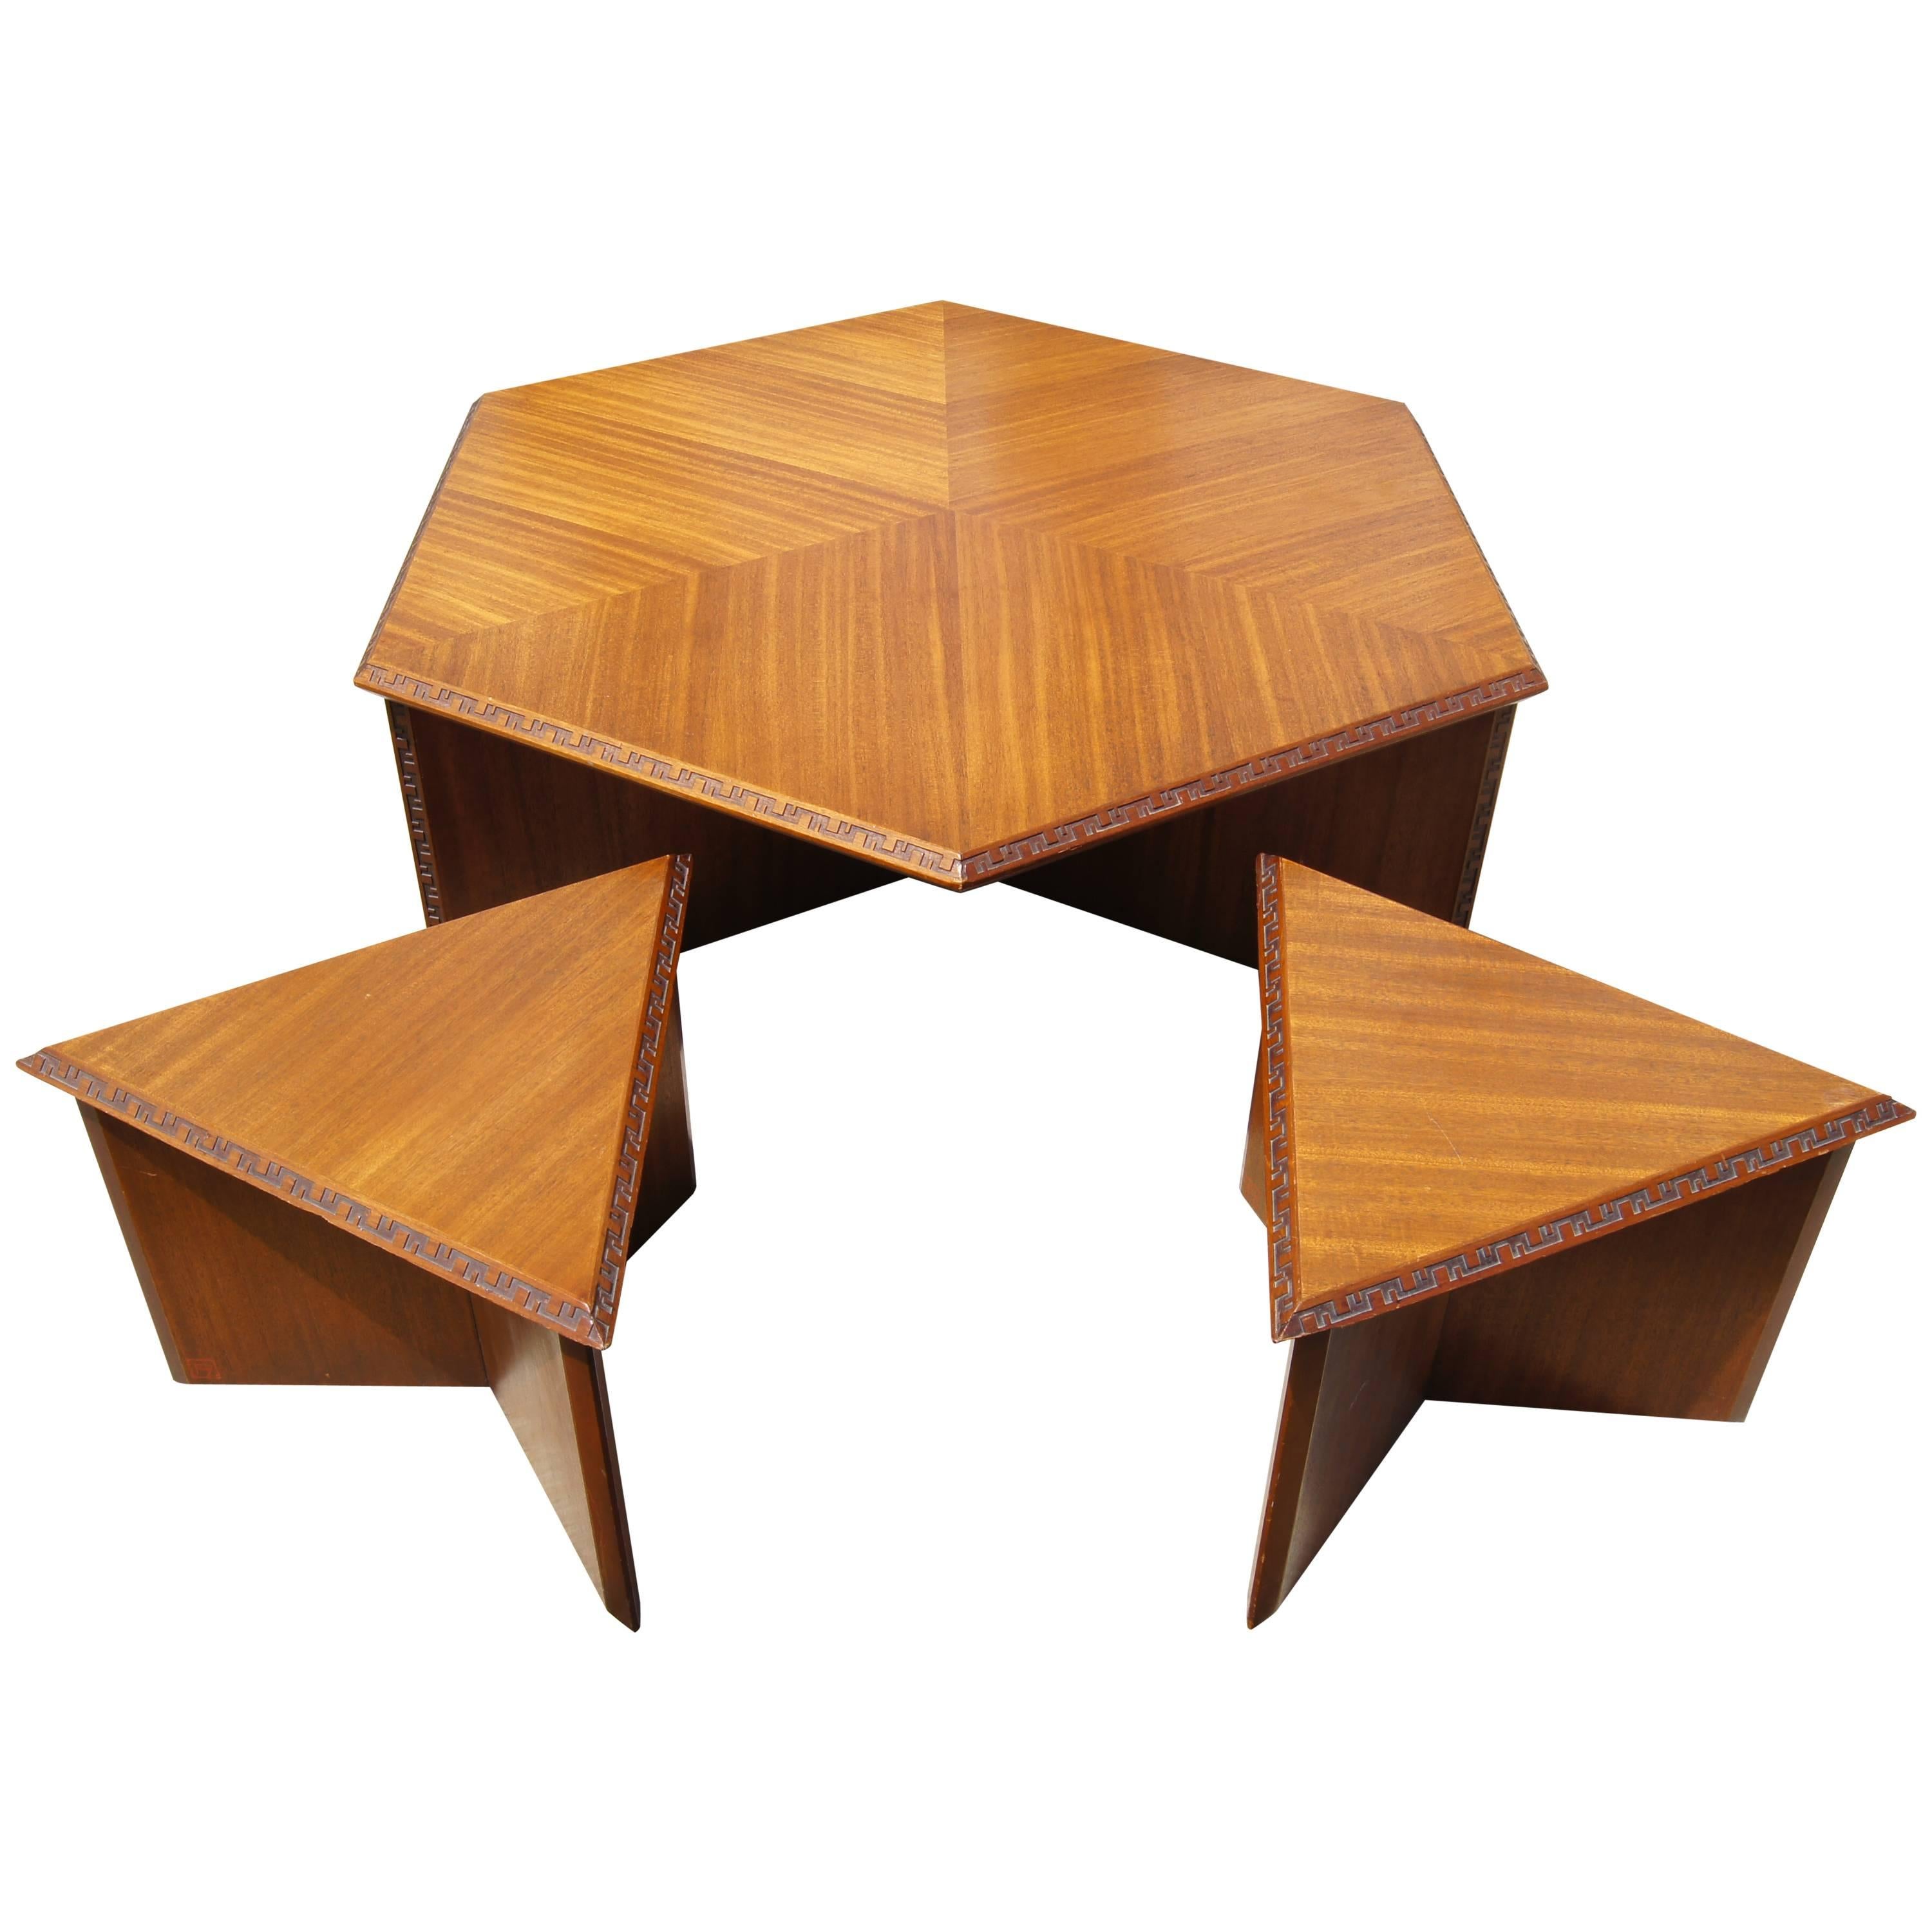 Hexagonal Coffee Table Set by Frank Lloyd Wright for Heritage-Henredon